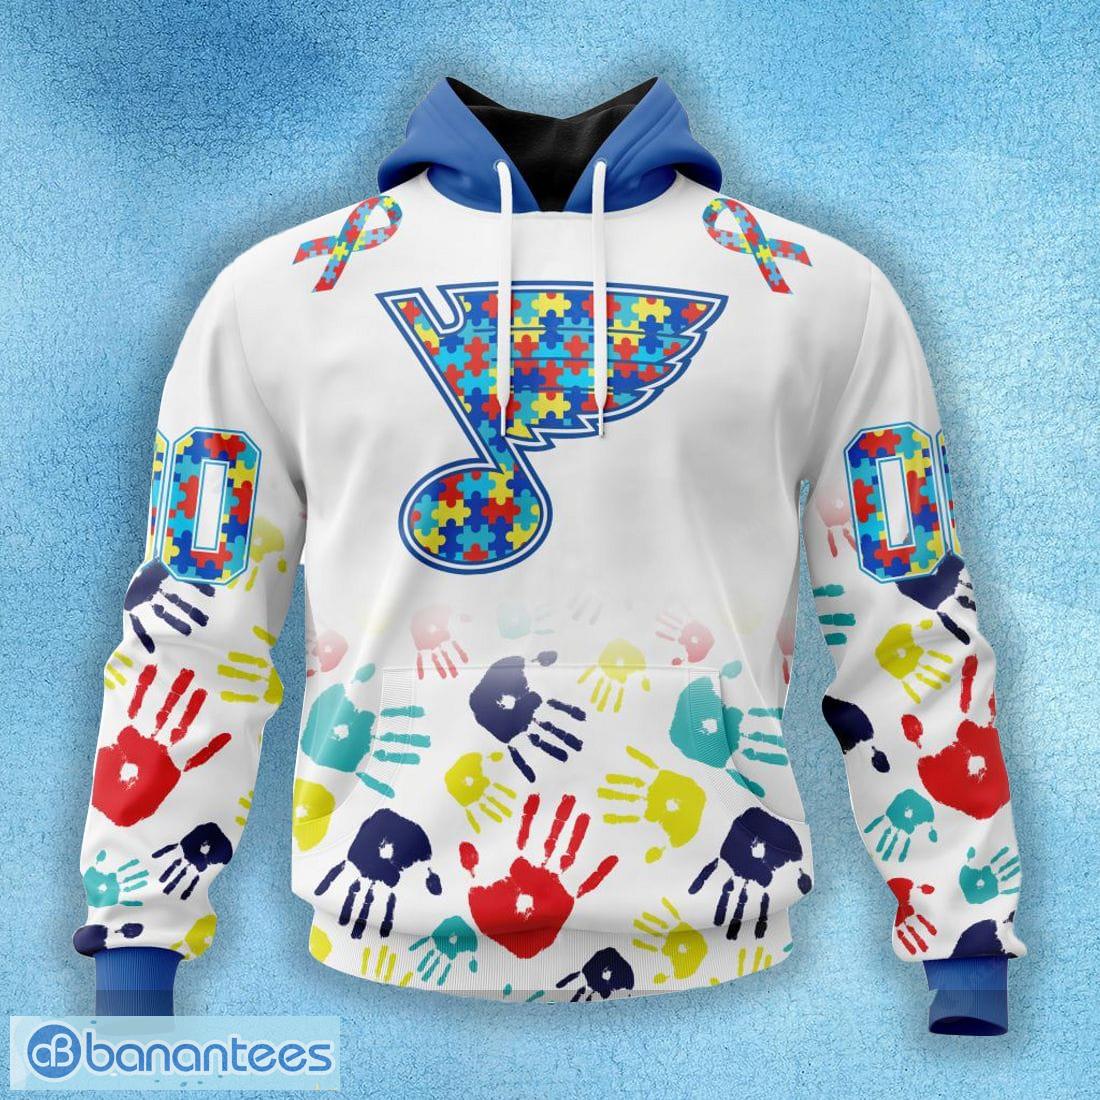 Nhl St. Louis Blues Pullover Sweatshirt